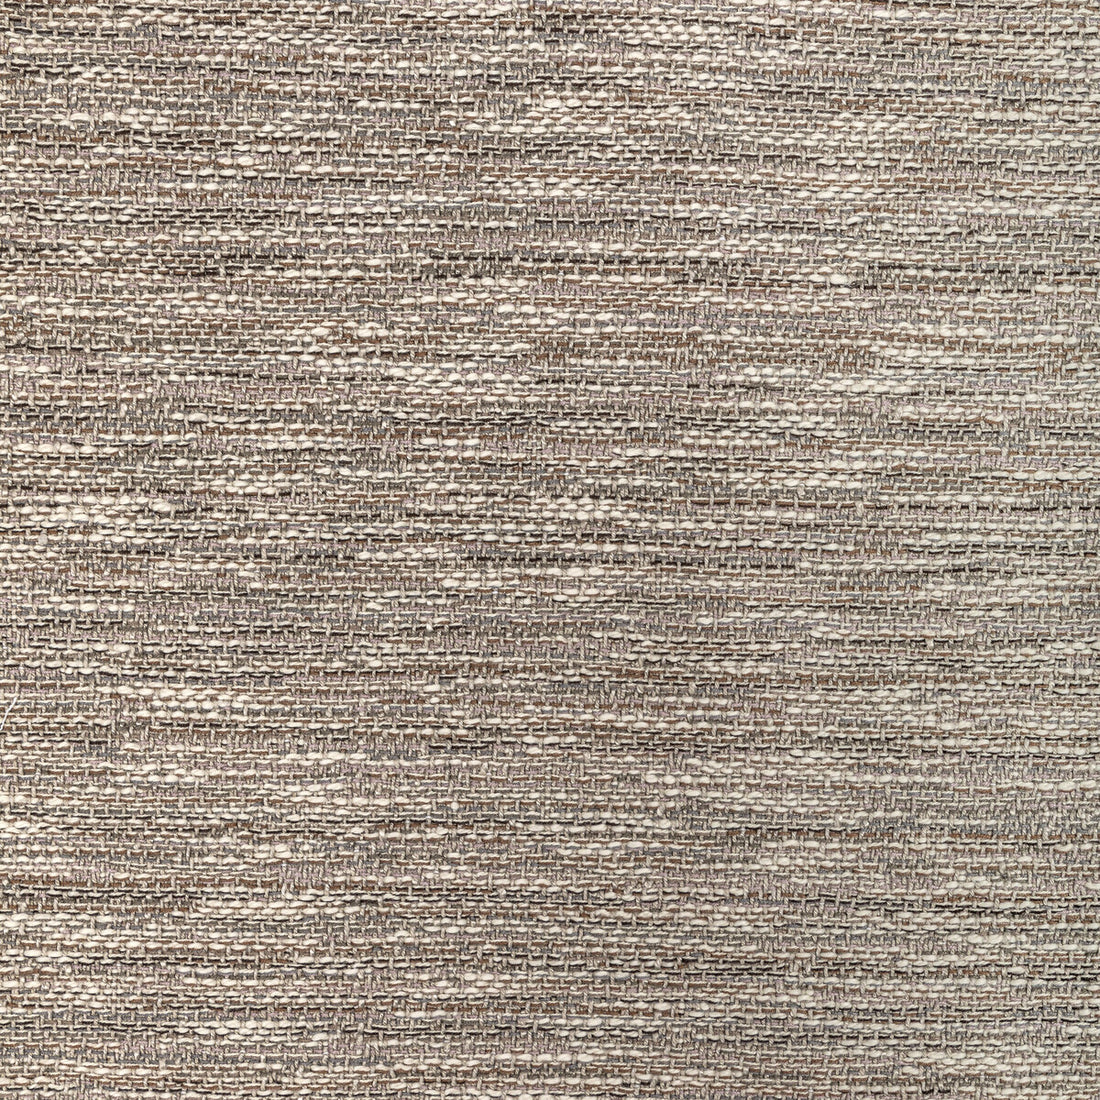 Dexter Melange fabric in dove color - pattern 36372.166.0 - by Kravet Couture in the Corey Damen Jenkins Trad Nouveau collection